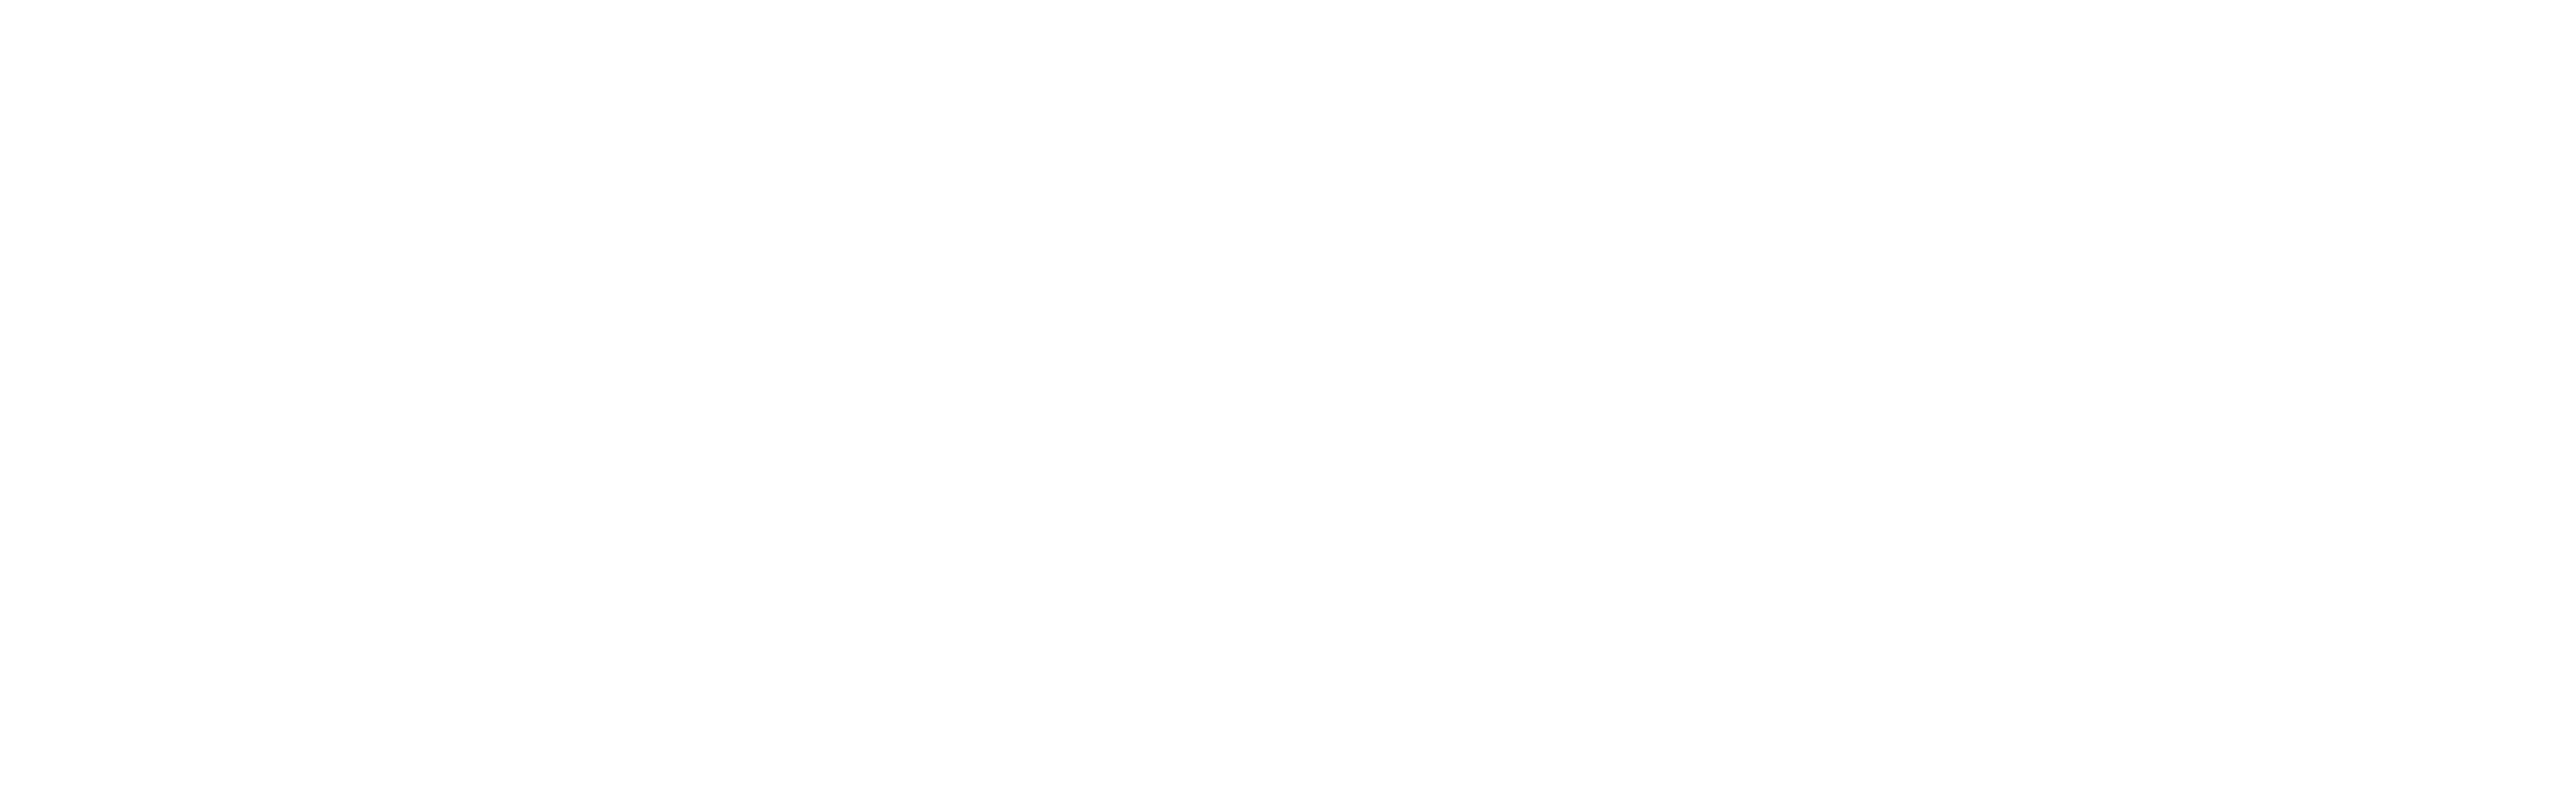 jetyo, logo